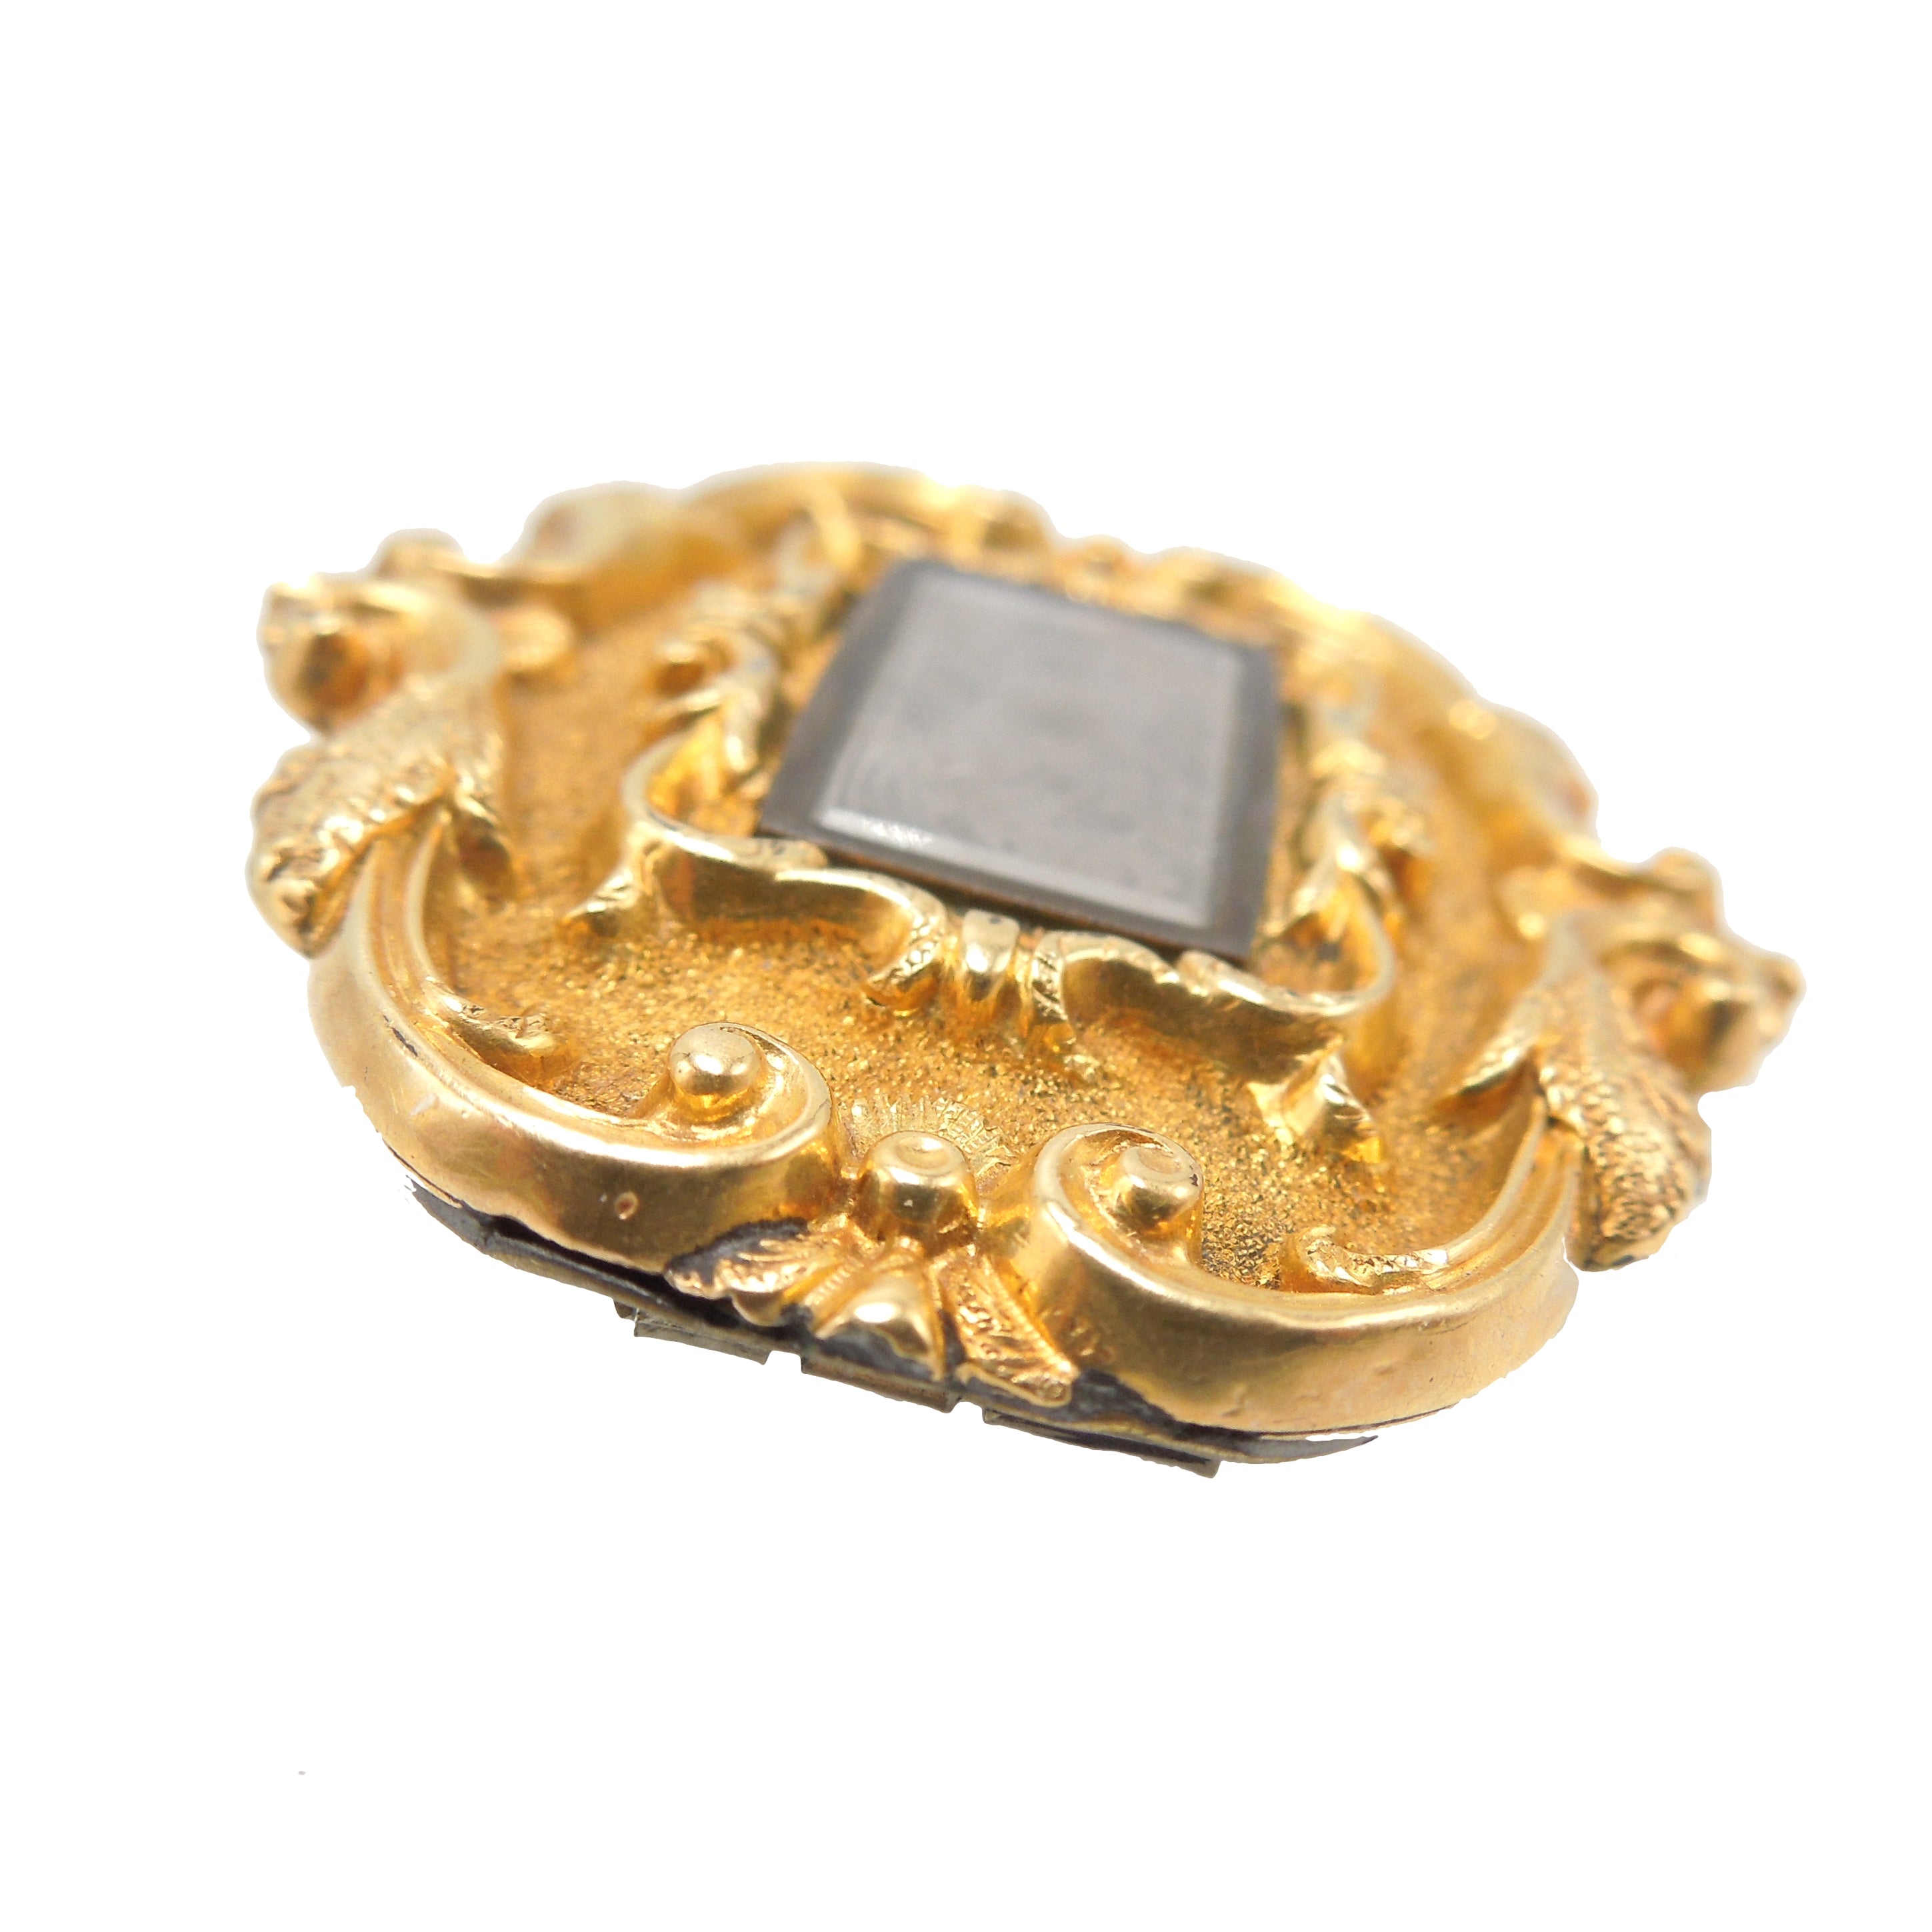 G.W. Clarke & Co. (ca. 1882) Yellow Gold Commemorative Hair Jewelry Brooch